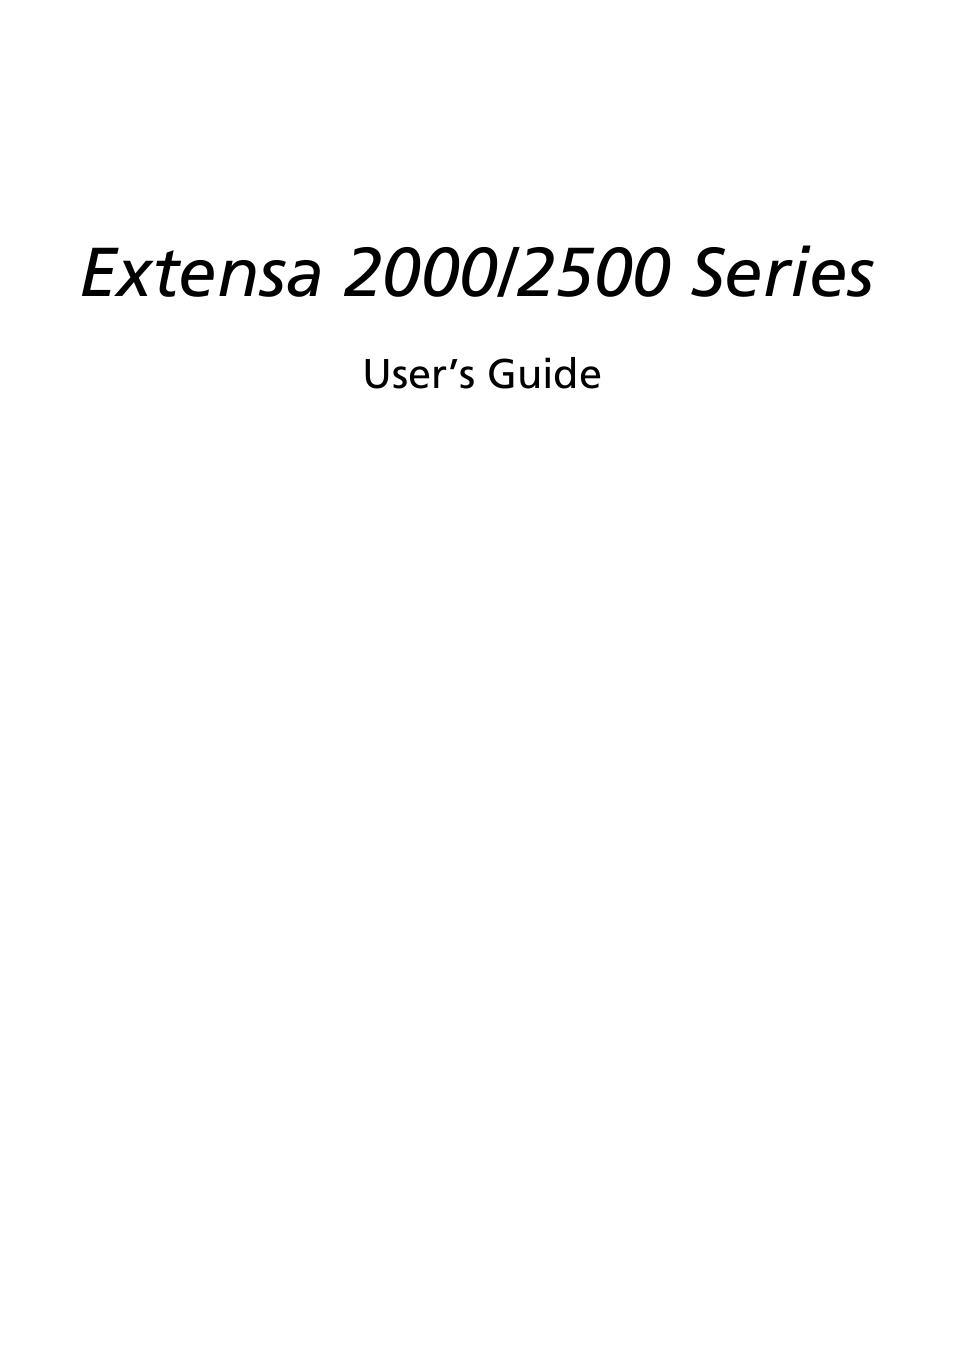 2500 Series